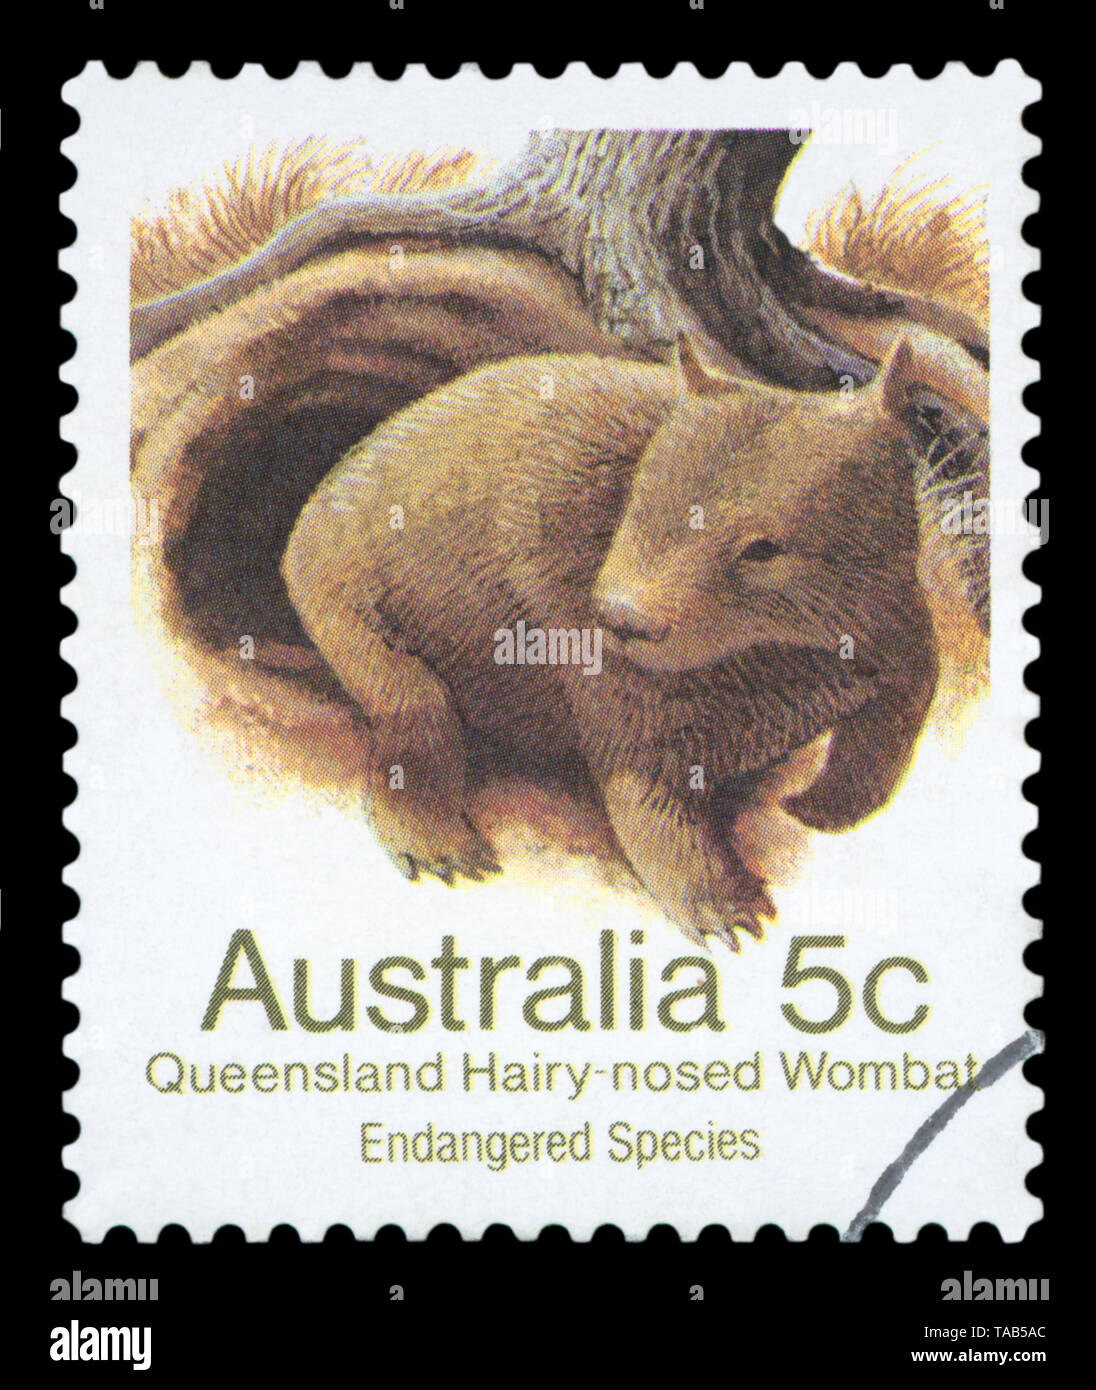 AUSTRALIA - CIRCA 1981: a stamp printed in the Australia shows Queensland Hairy-nosed Wombat, Lasiorhinus Krefftii, Marsupial Mammal, circa 1981. Stock Photo